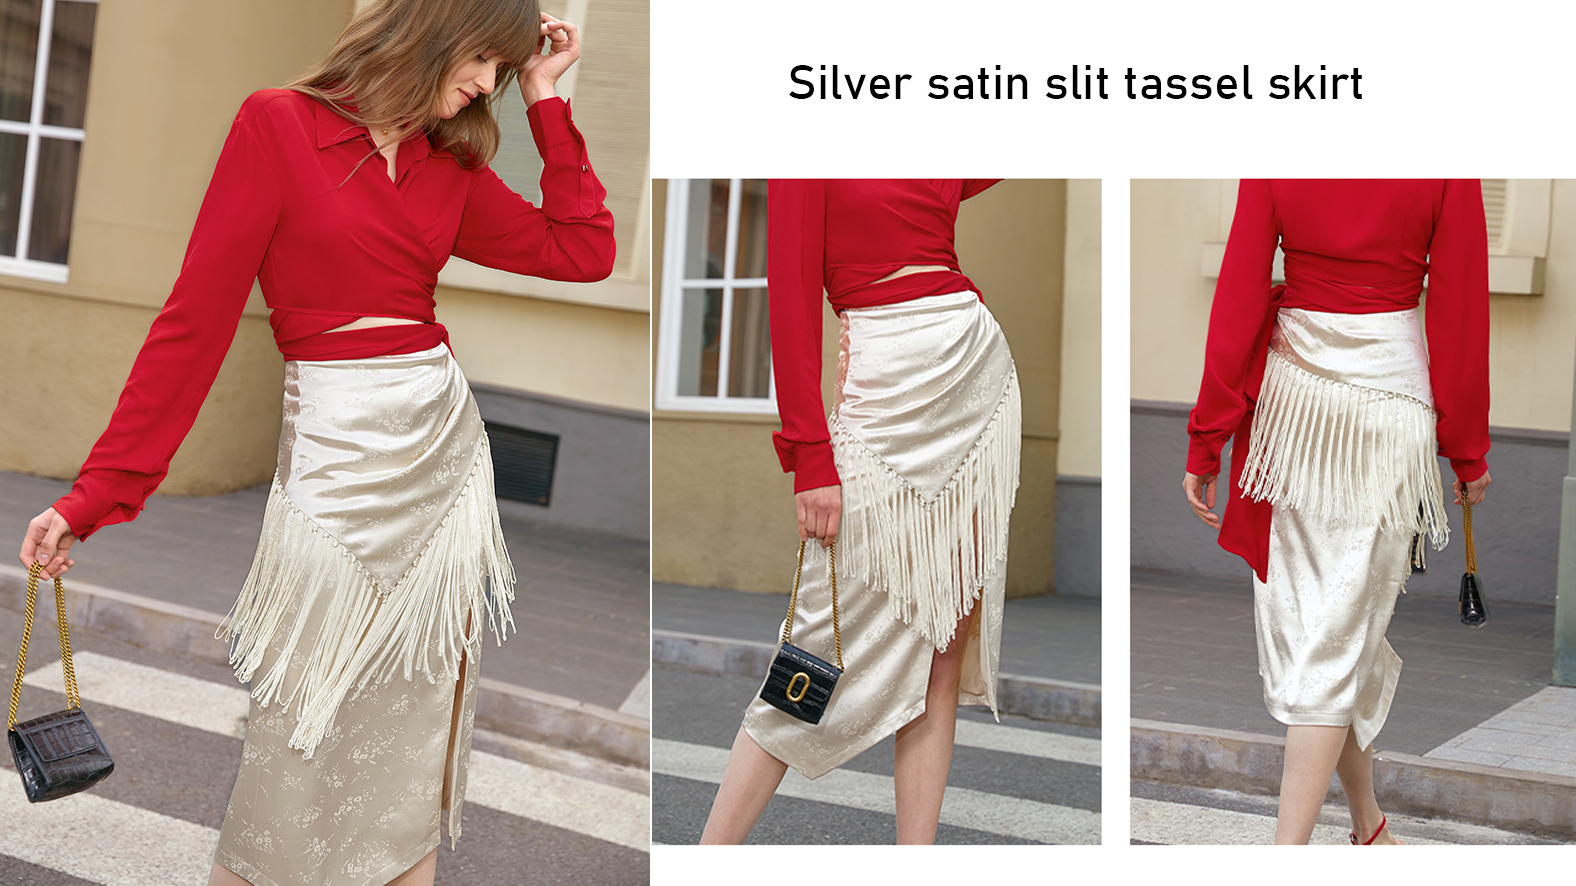 Best Silver satin slit tassel skirt Company – Auschalink